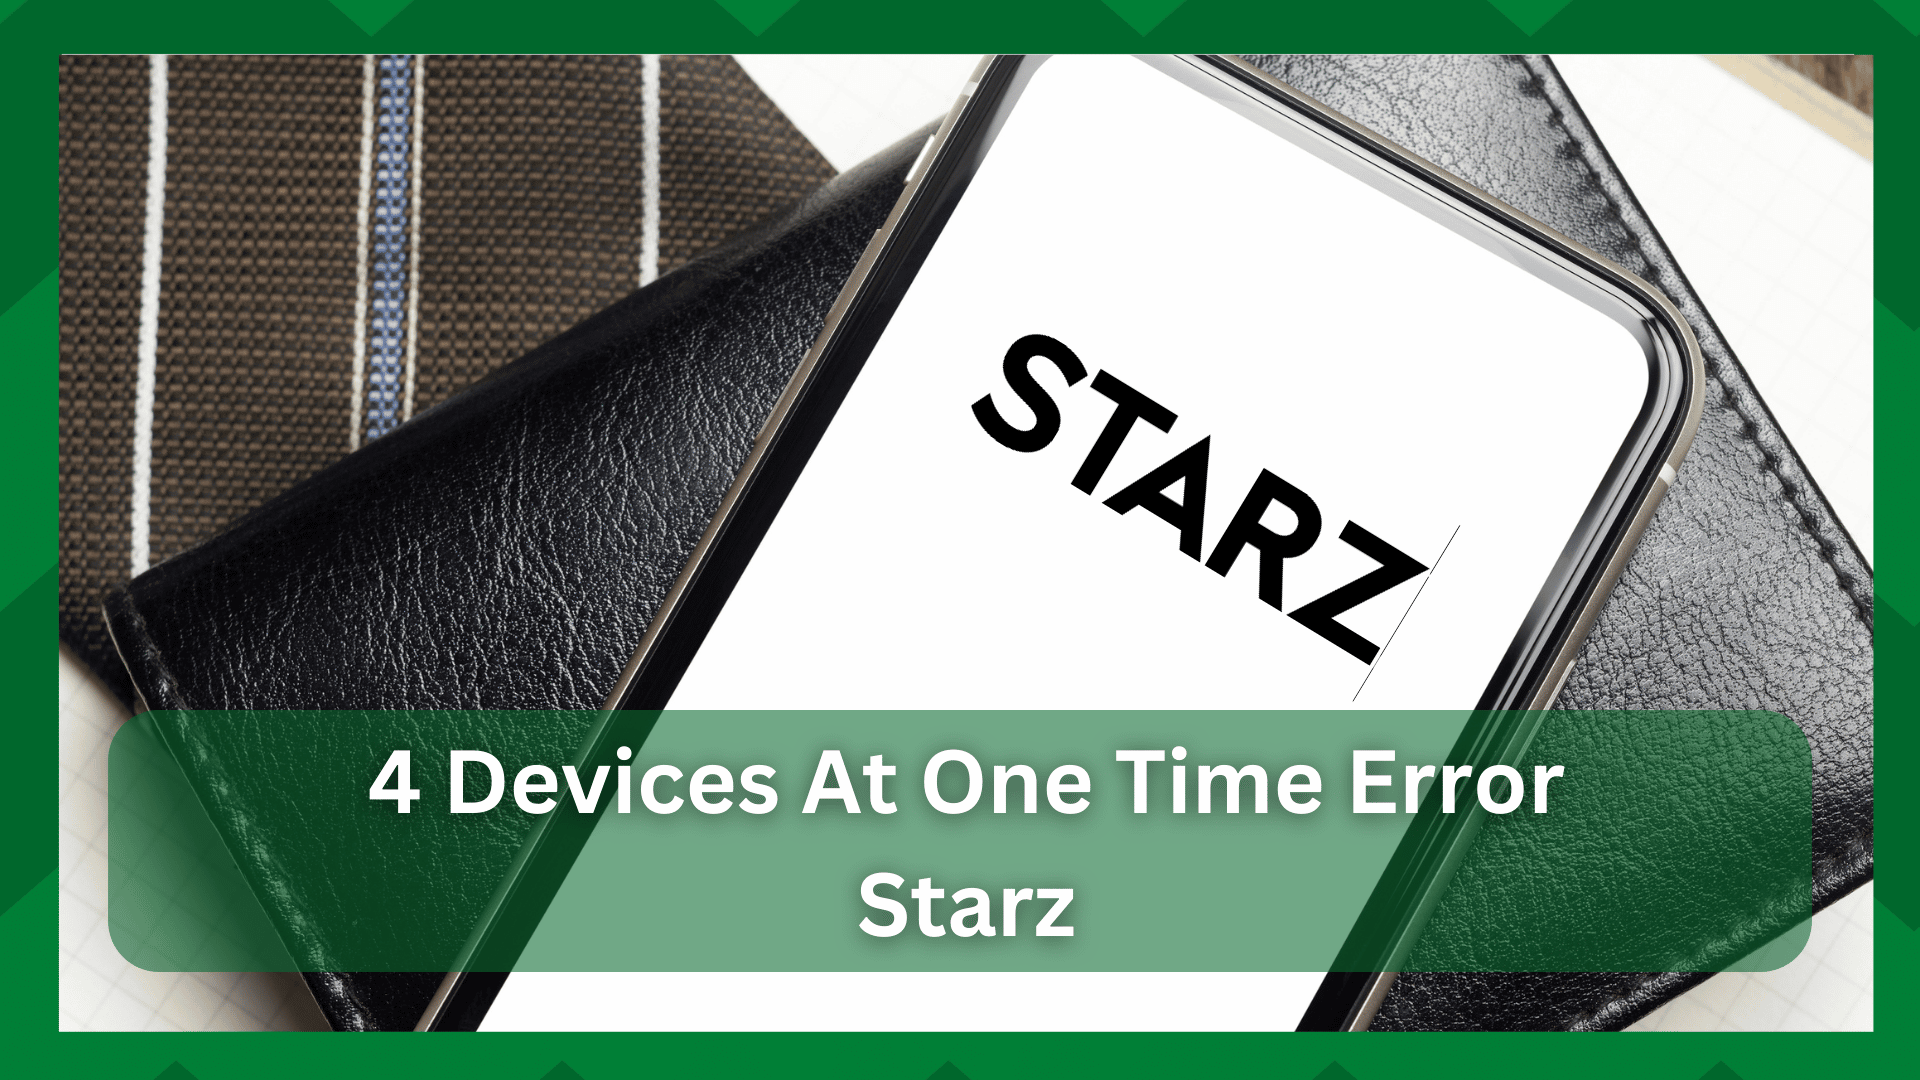 STARZ 4 συσκευές ταυτόχρονα σφάλμα (5 γρήγορες συμβουλές αντιμετώπισης προβλημάτων)